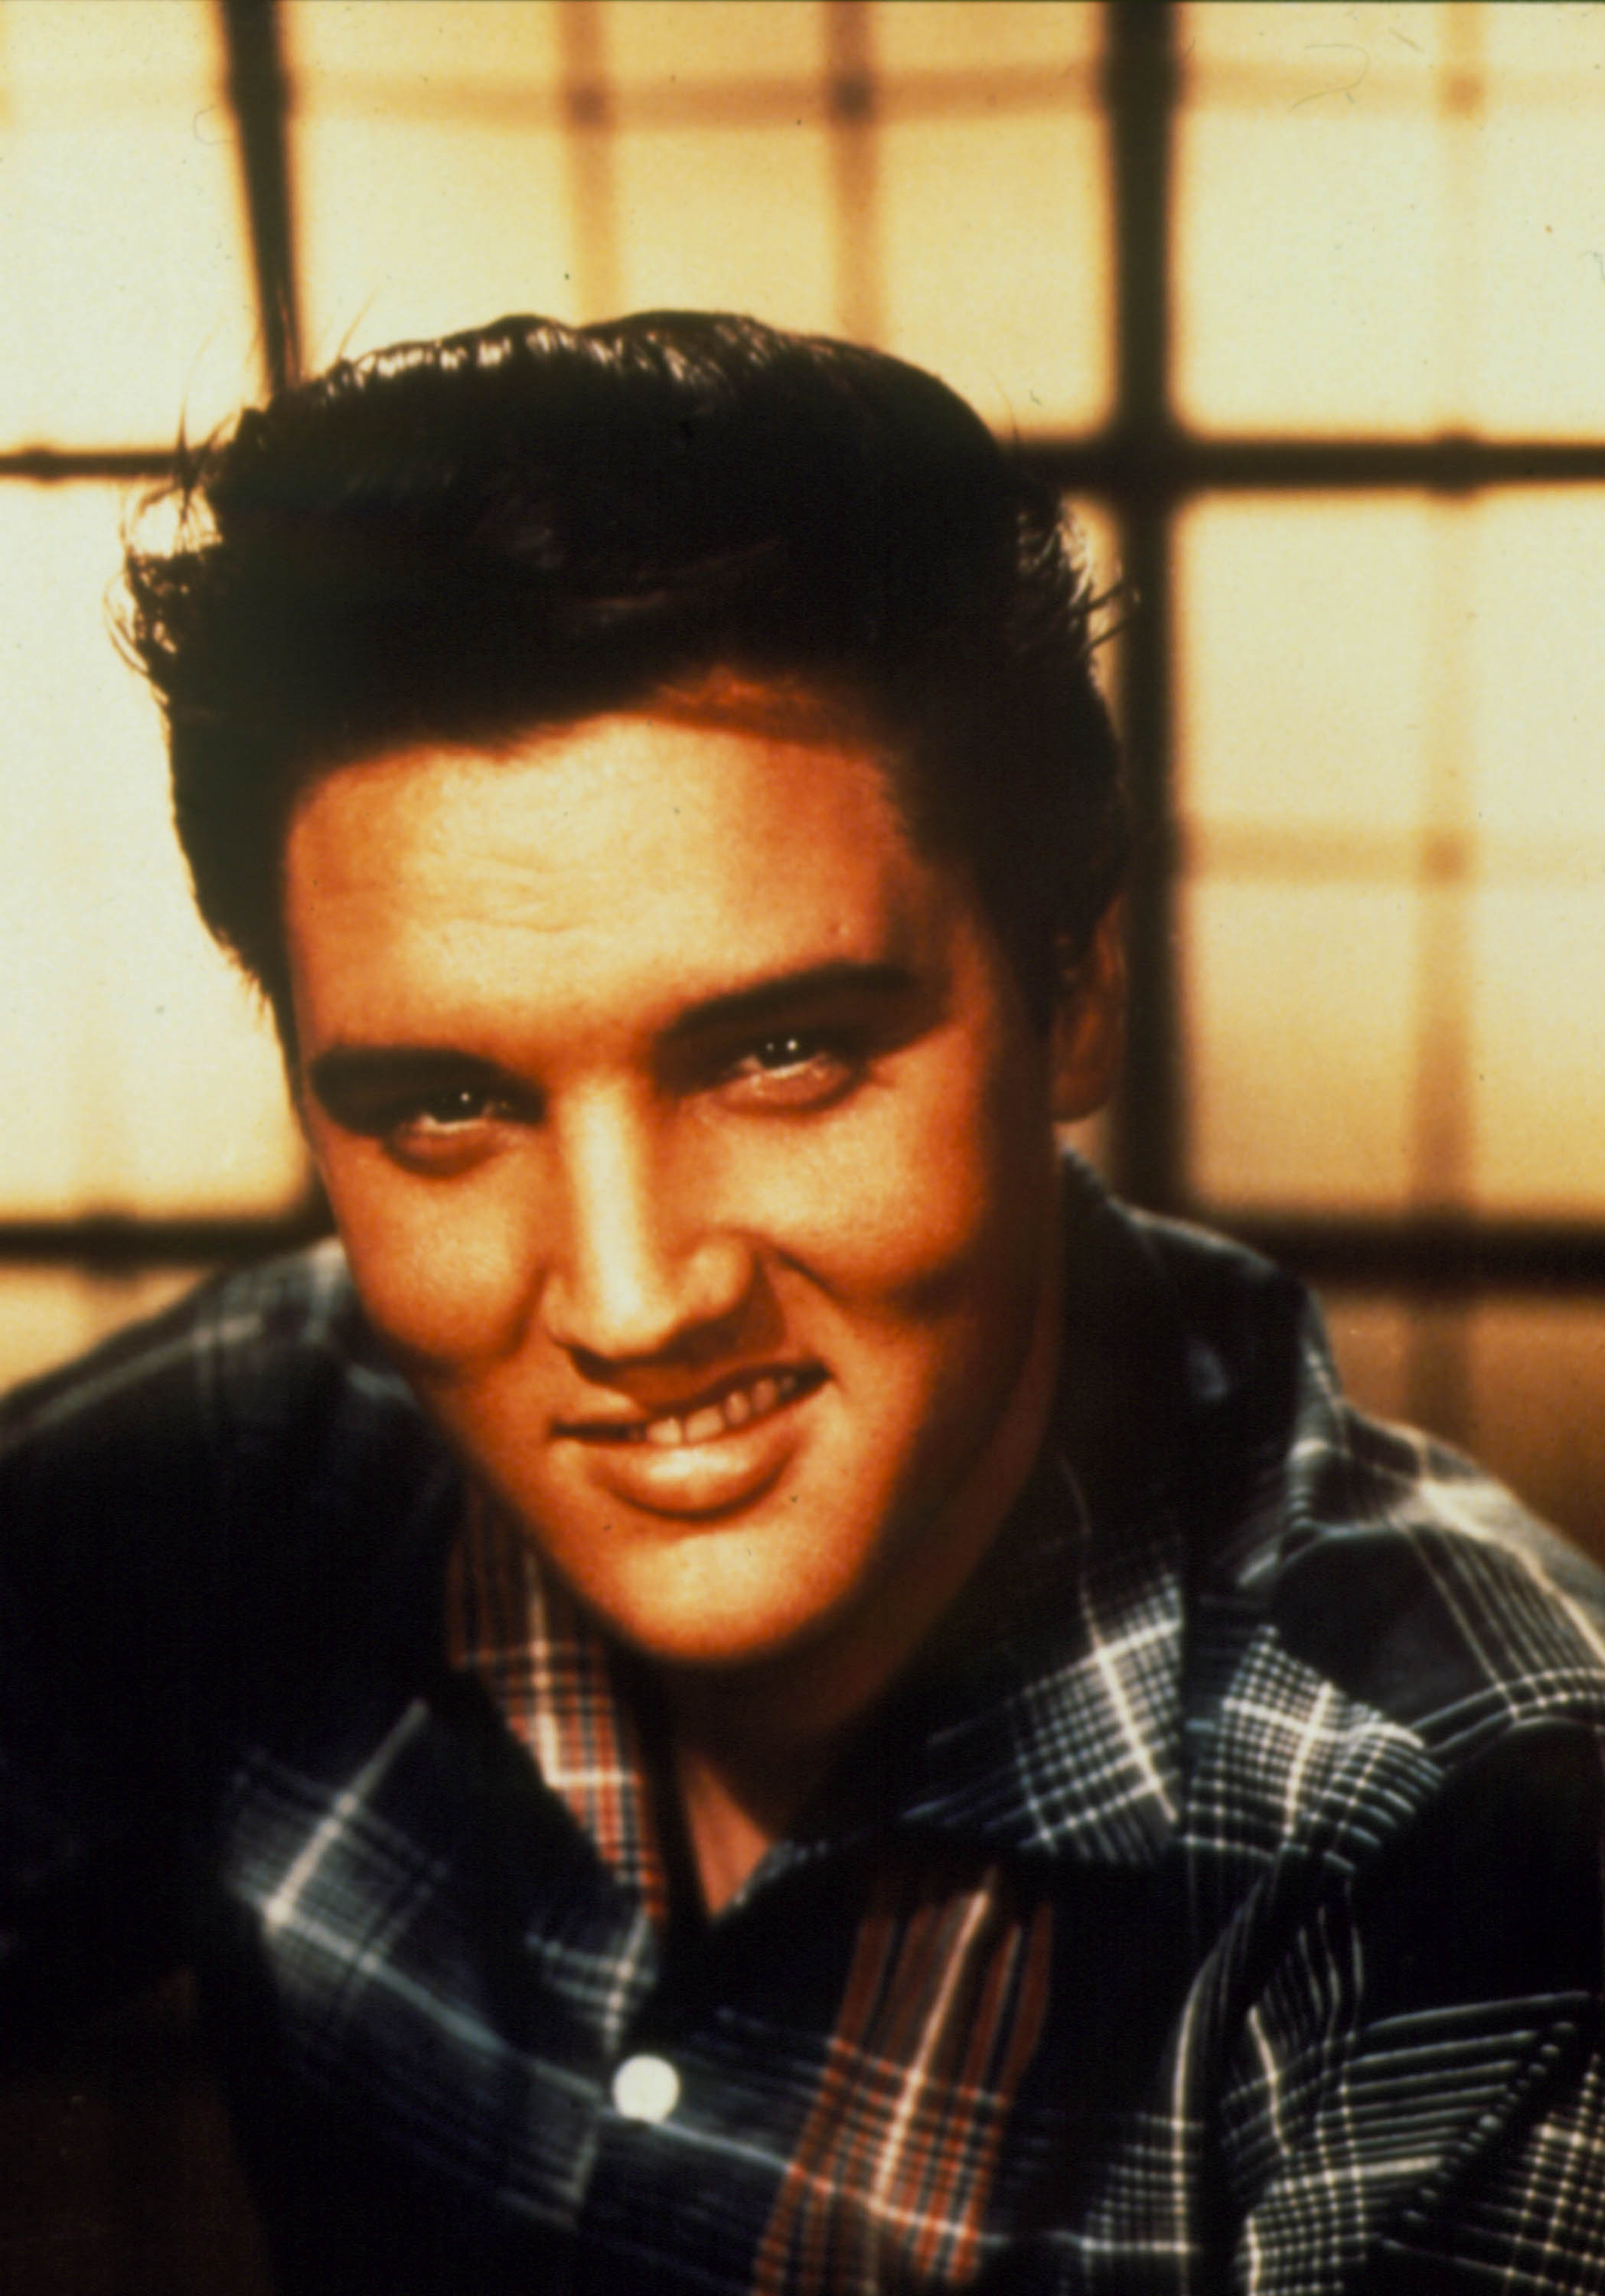 Singer Elvis Presley poses for a studio portrait, circa 1965  | Source: Getty Images